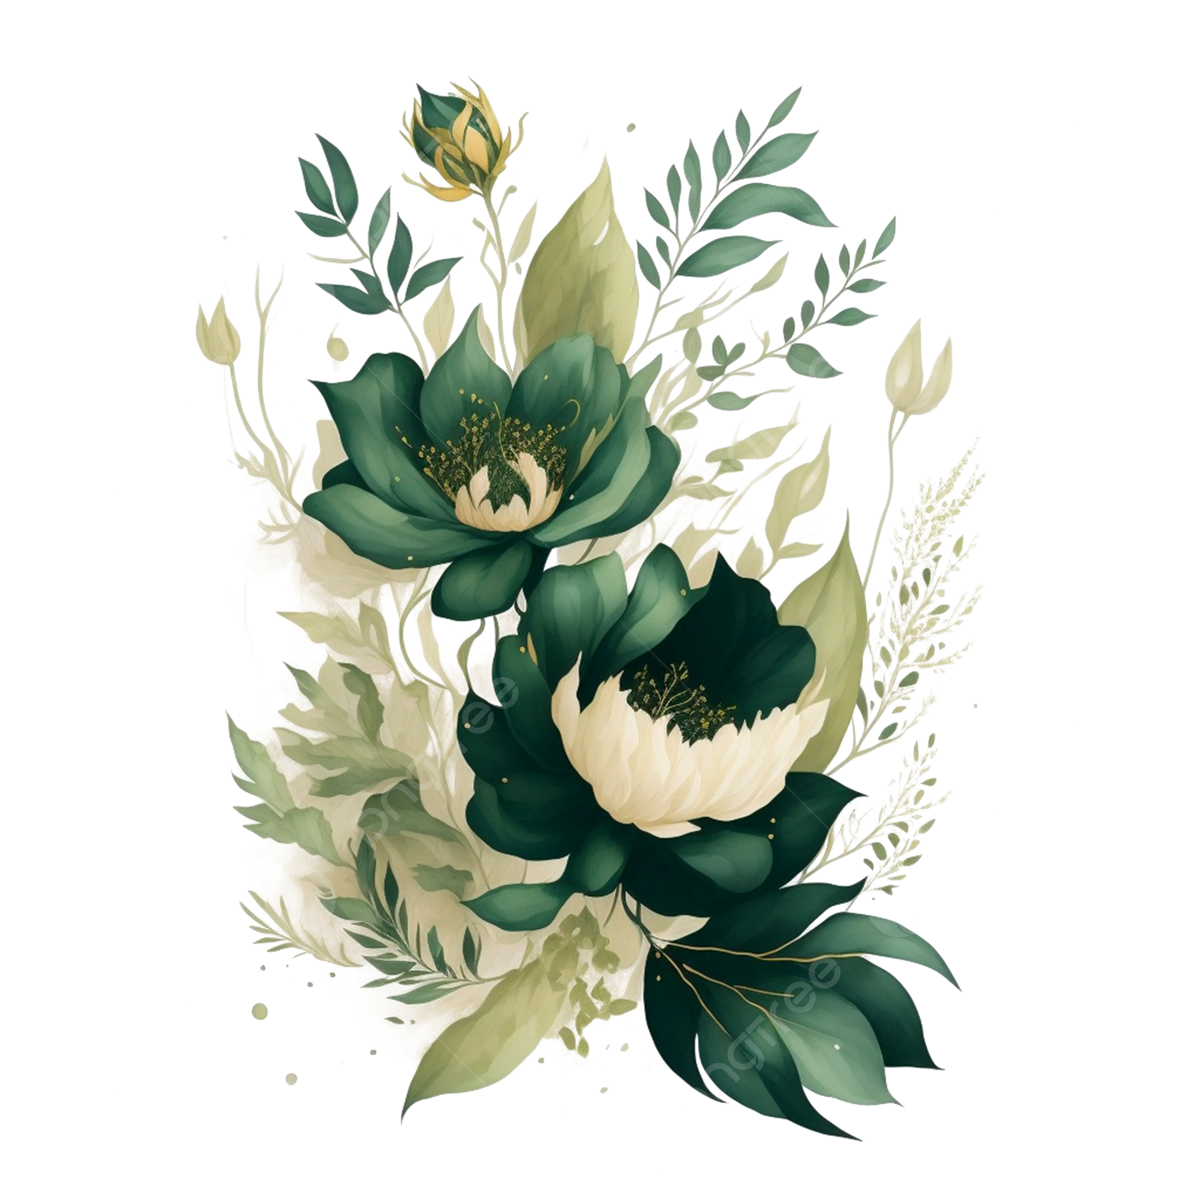 Green Flower PNG Image File